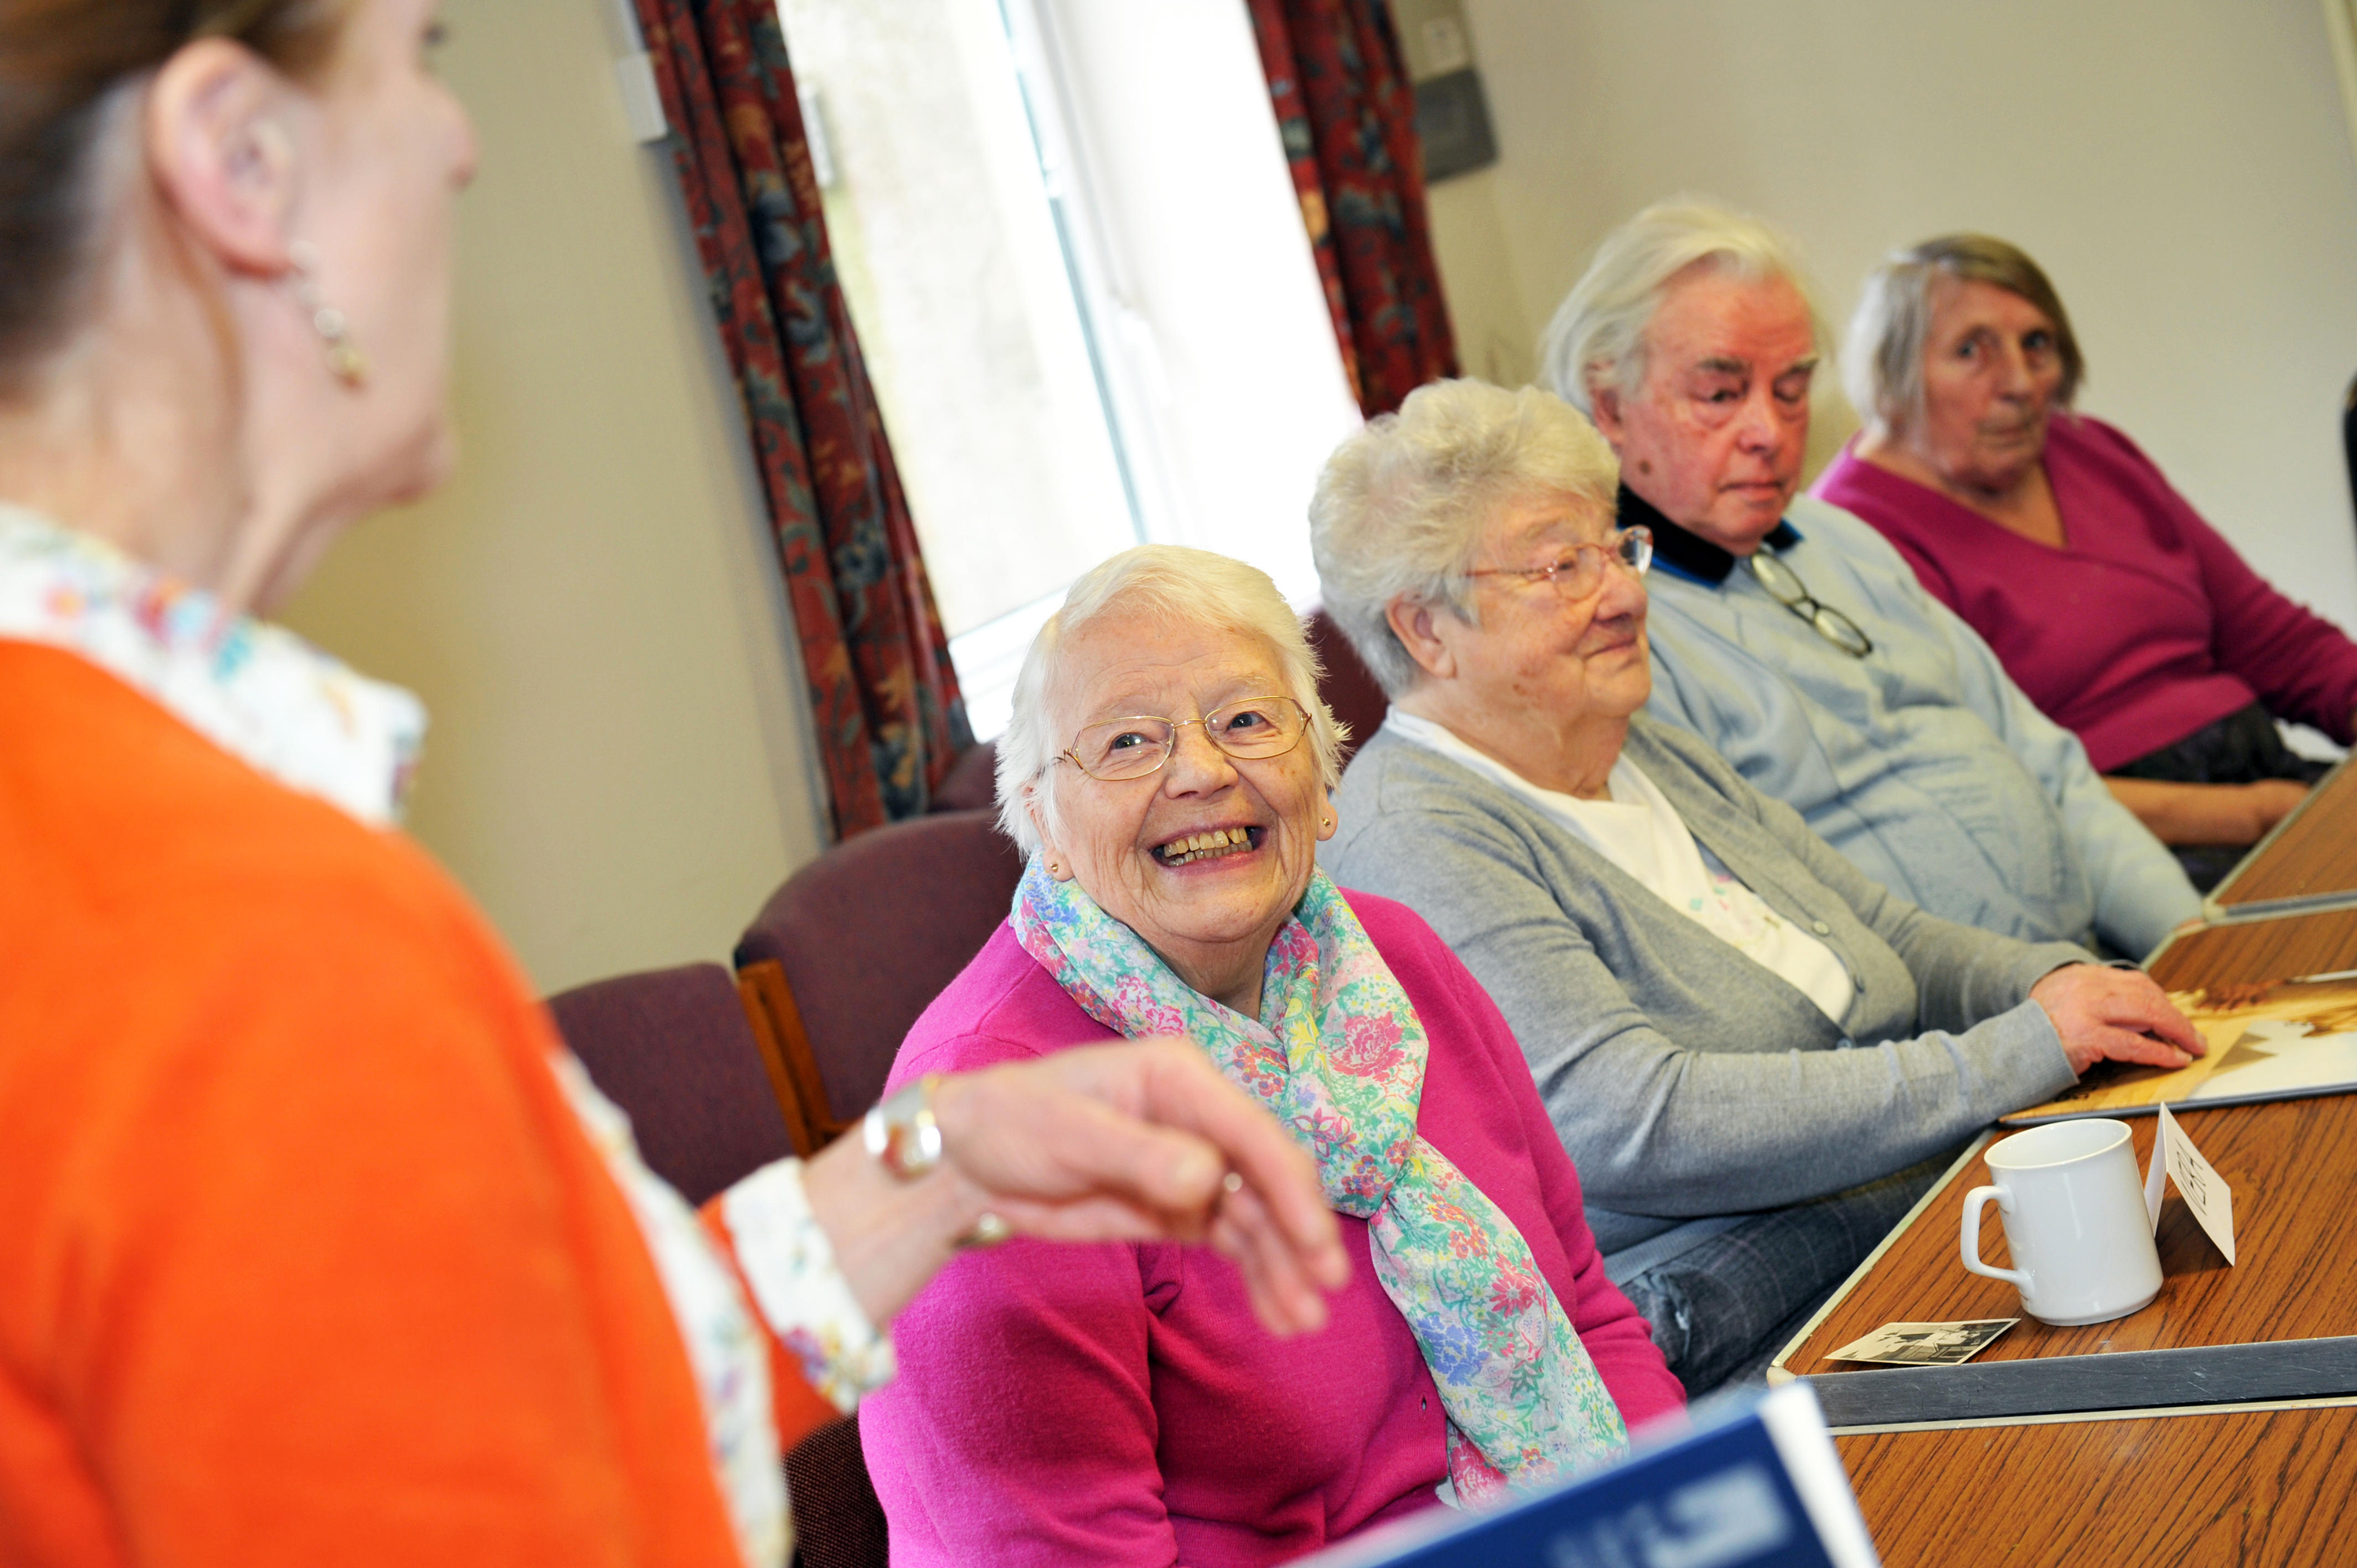 Elderly people take part in a dementia care workshop